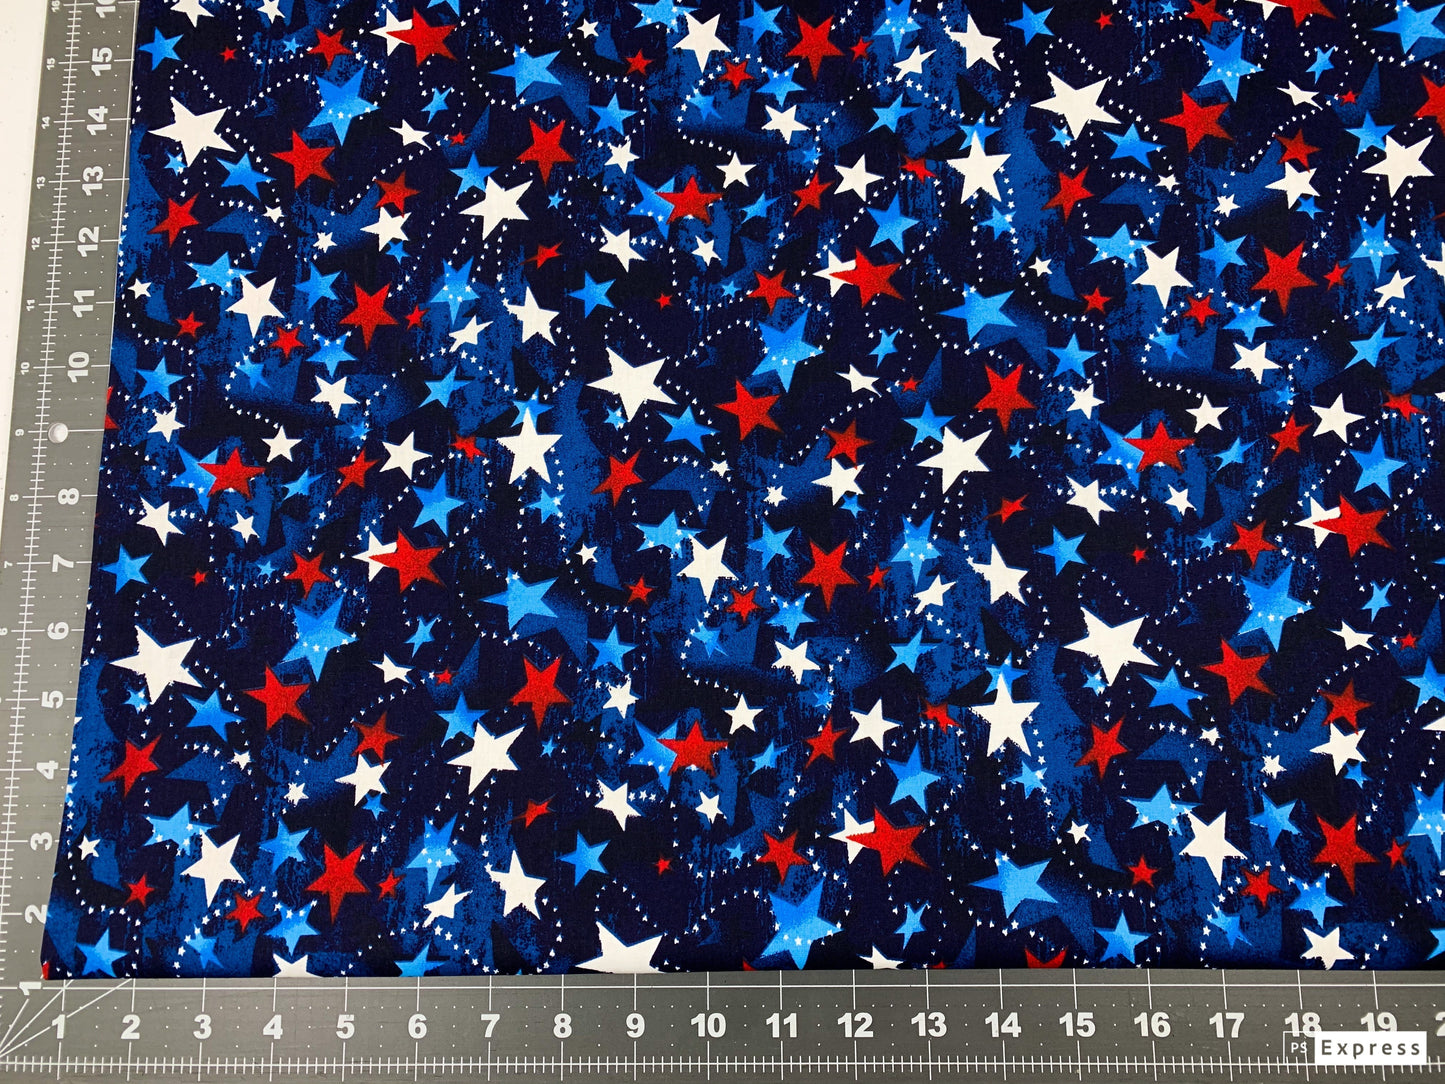 USA Streaming Stars fabric 48476 Patriotic cotton fabric